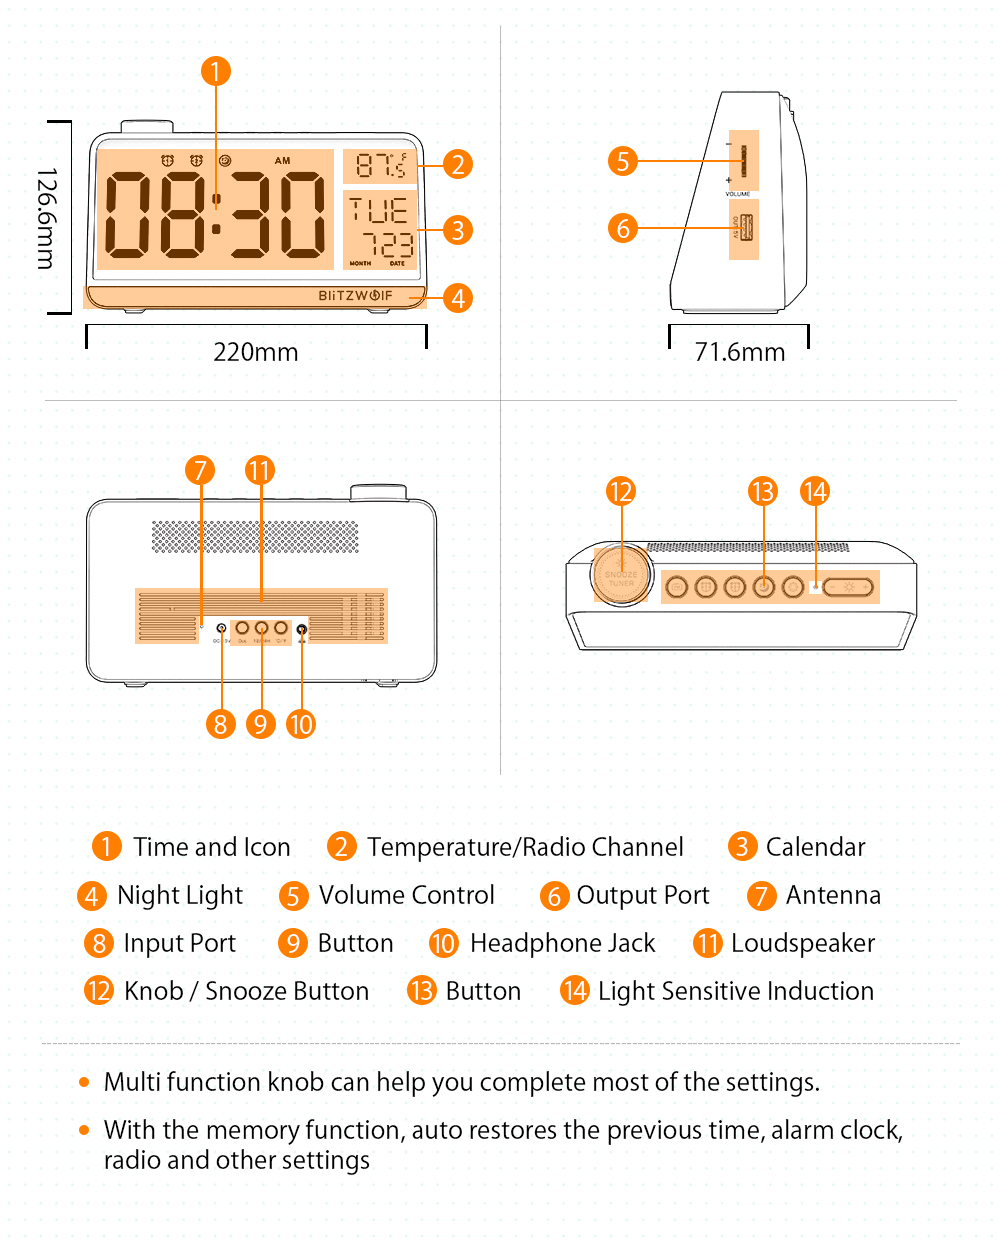 BlitzWolf BW-LAC1 Radio Digital Alarm Clock Night Light Large Display FM Radio Function Double Alarm Clock Temperature Display for Desk Decoration